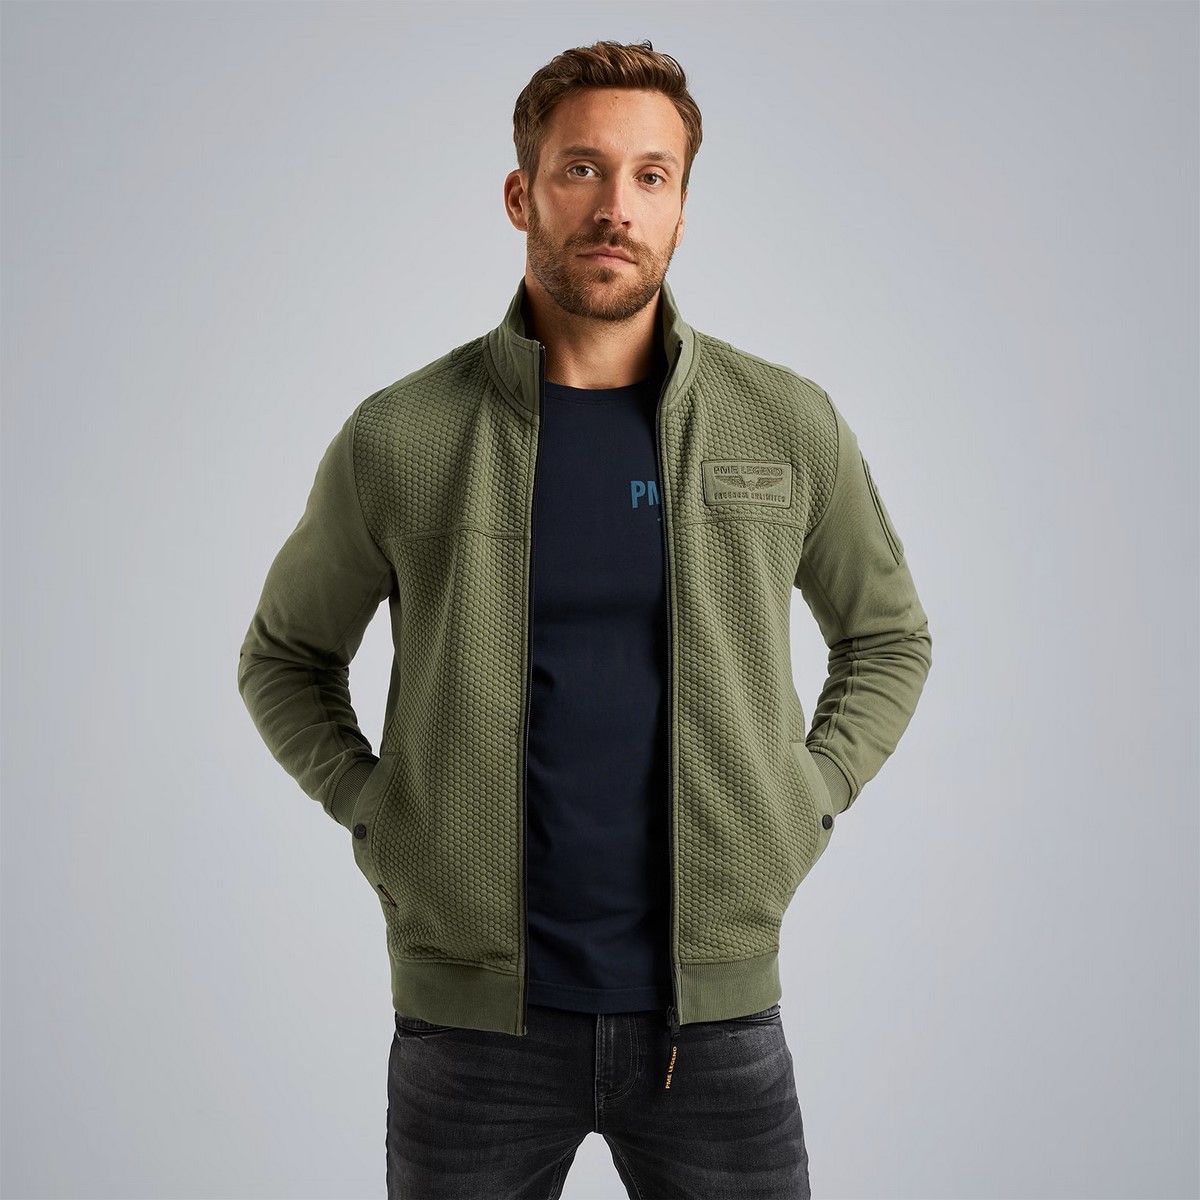 Pme Legend Zip jacket jacquard interlock swea Deep Lichen Green 2900141495056